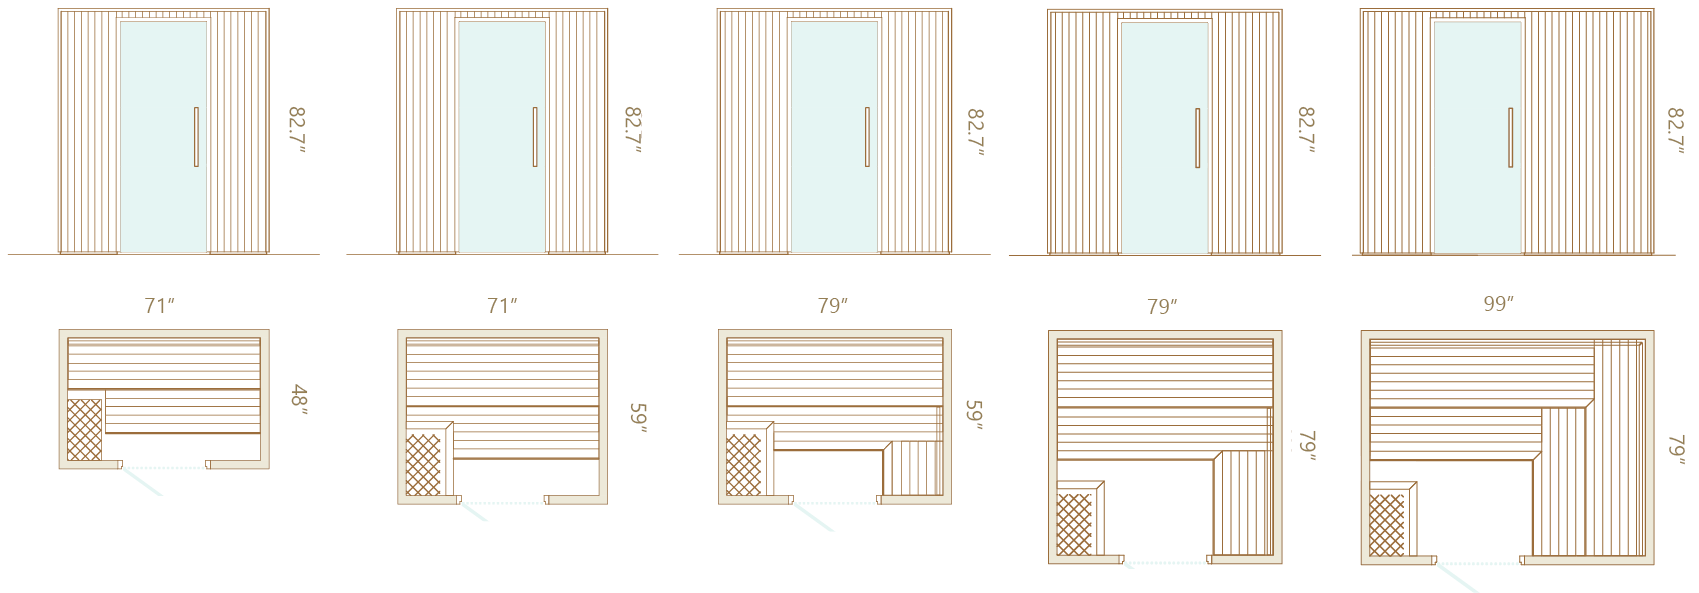 SSB_Auroom-Familia-Wood-dimensions